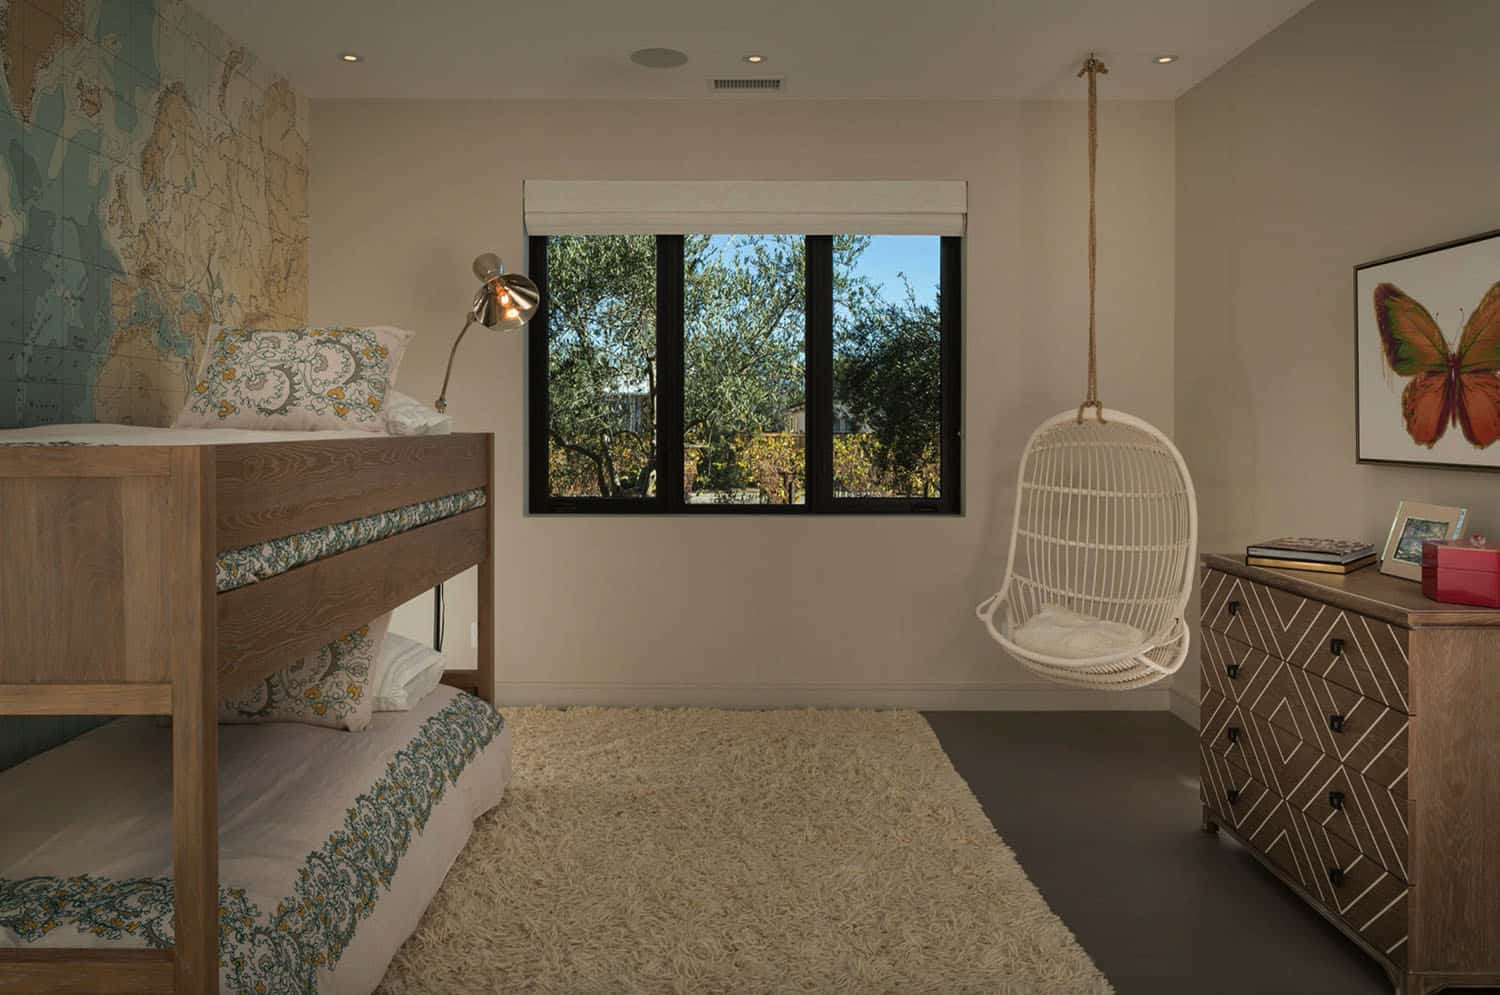 contemporary-kids-bedroom